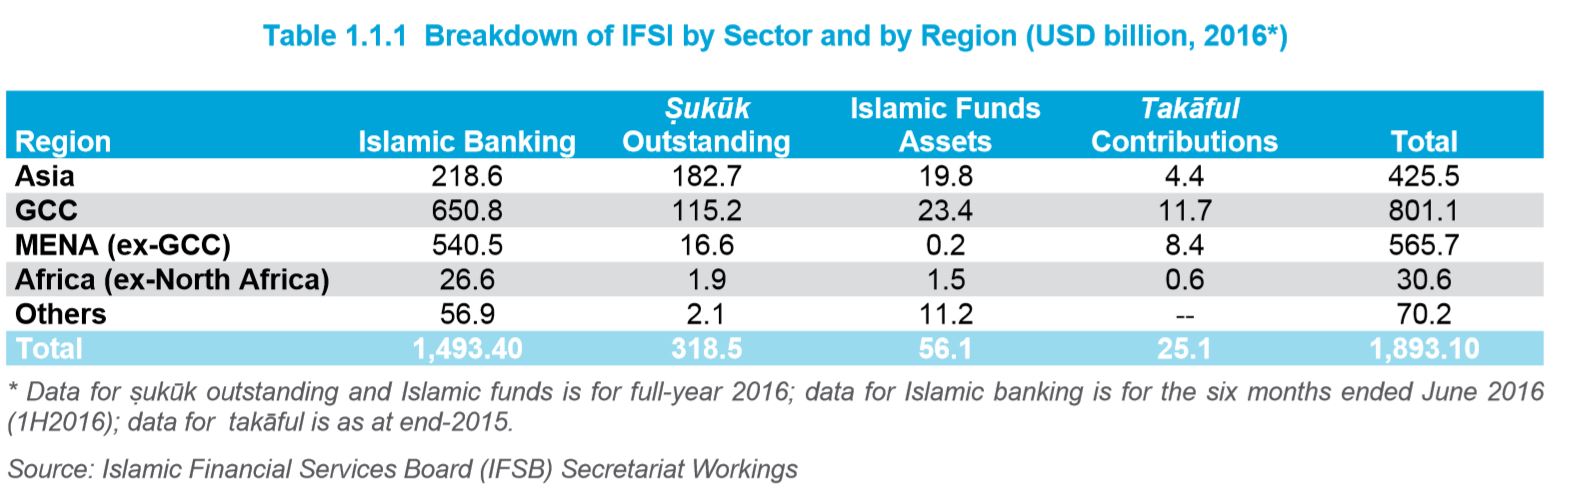 Breakdown of IFSI by Sector and by Region - USD billion, 2016